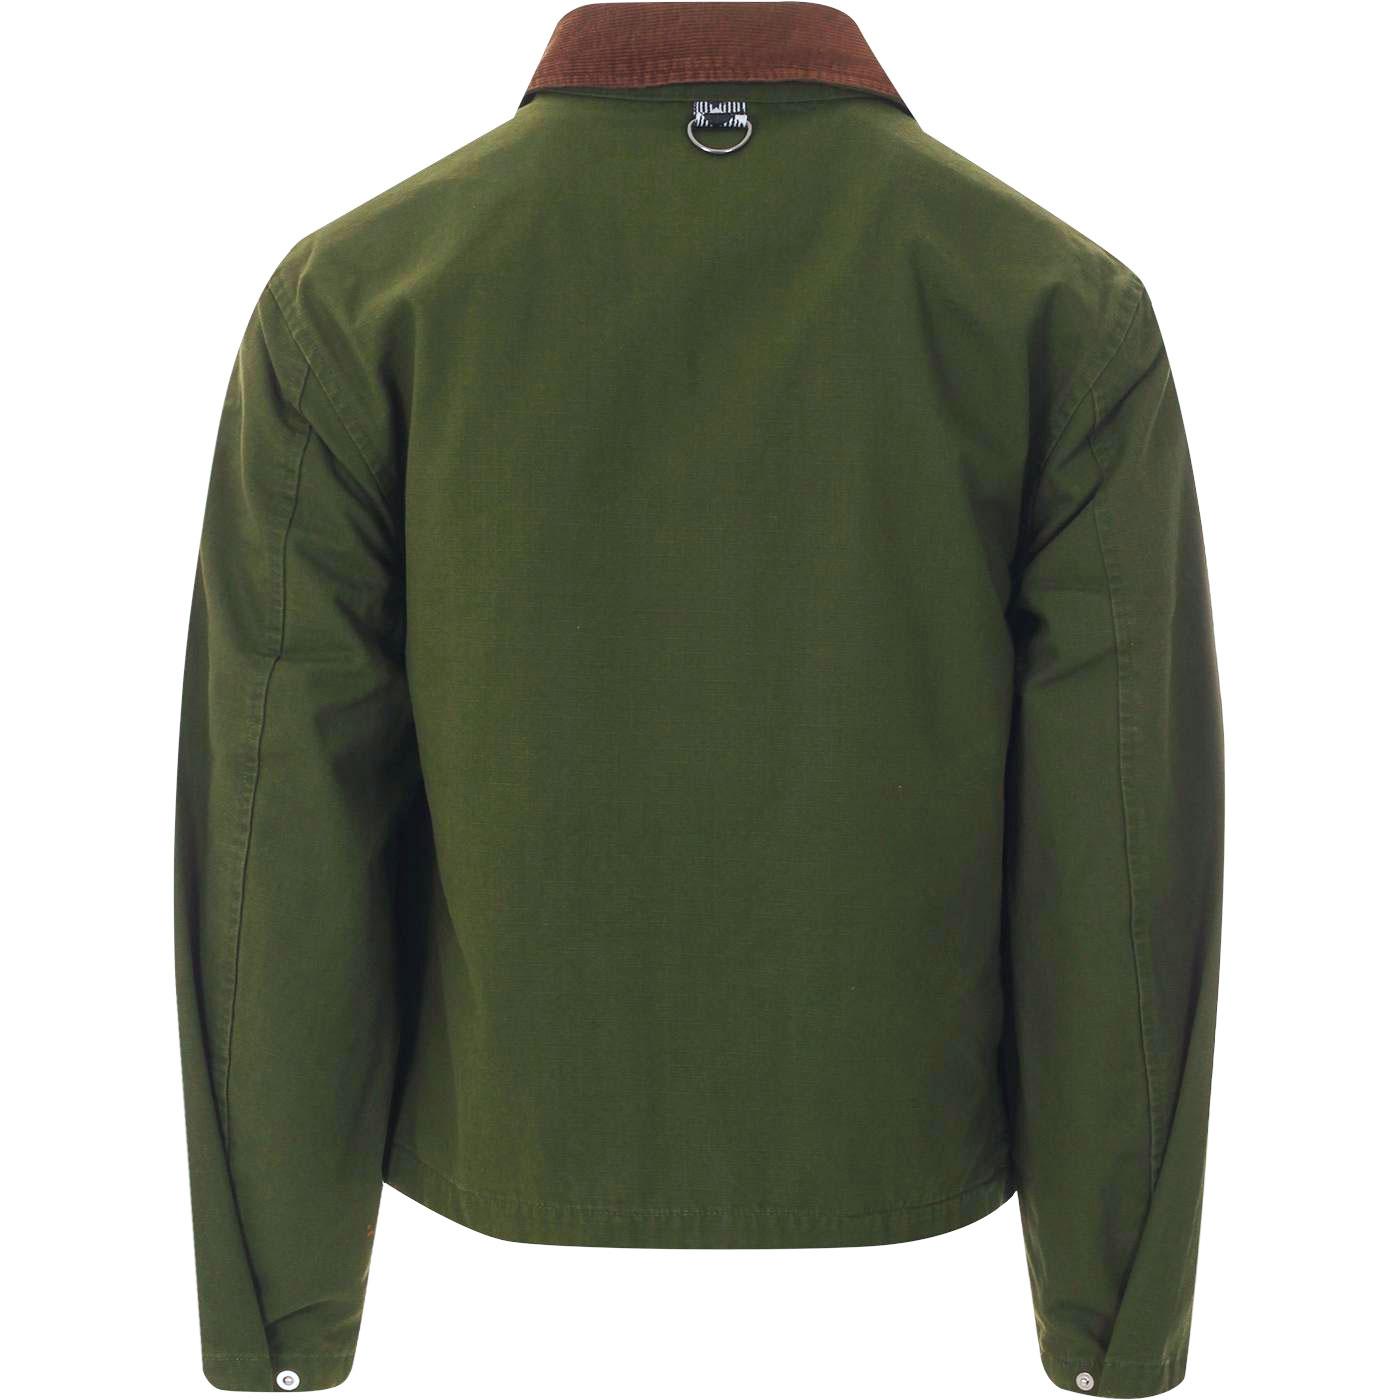 LEVI'S Retro Mod Cord Collar Fishing Jacket in Mossy Green